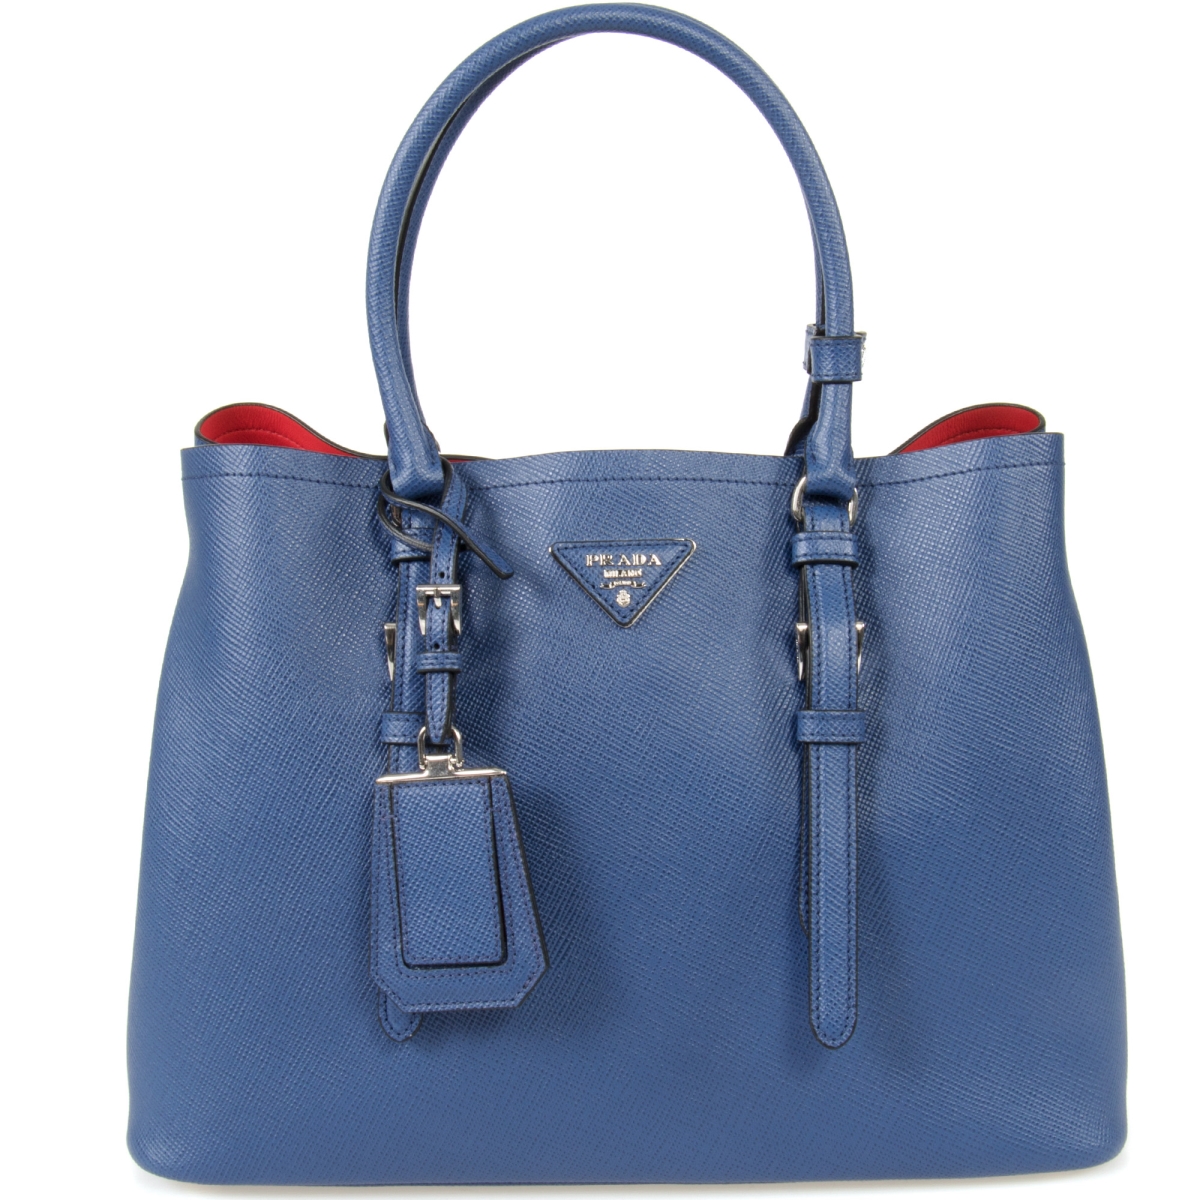 Prd-hbag-1bg838-f0021-c Double Leather Bag, Inchiostro & Ink Blue